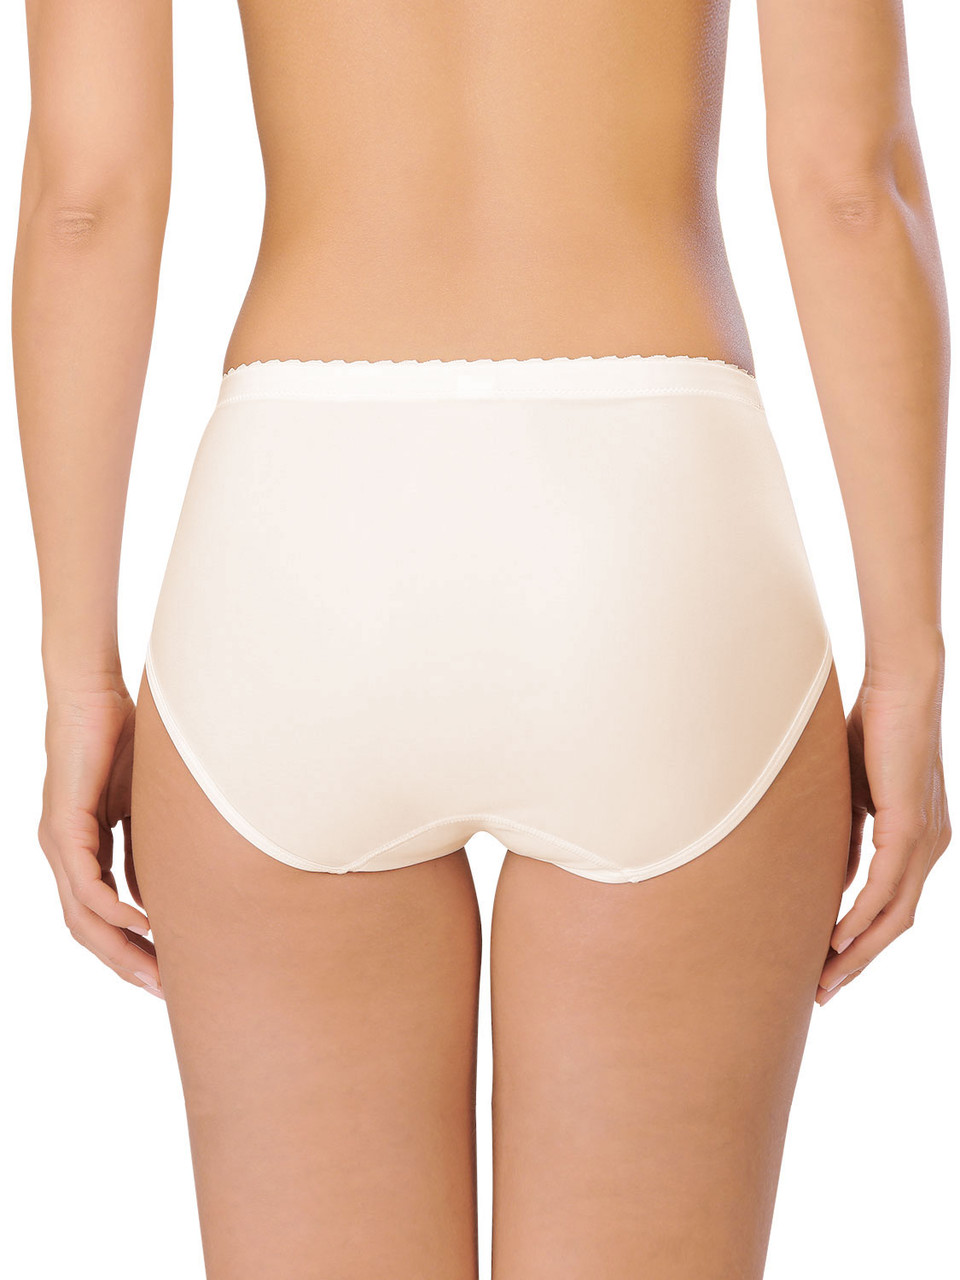 Lycra Cotton Medipress Abdominal Panty at Rs 4250/piece in